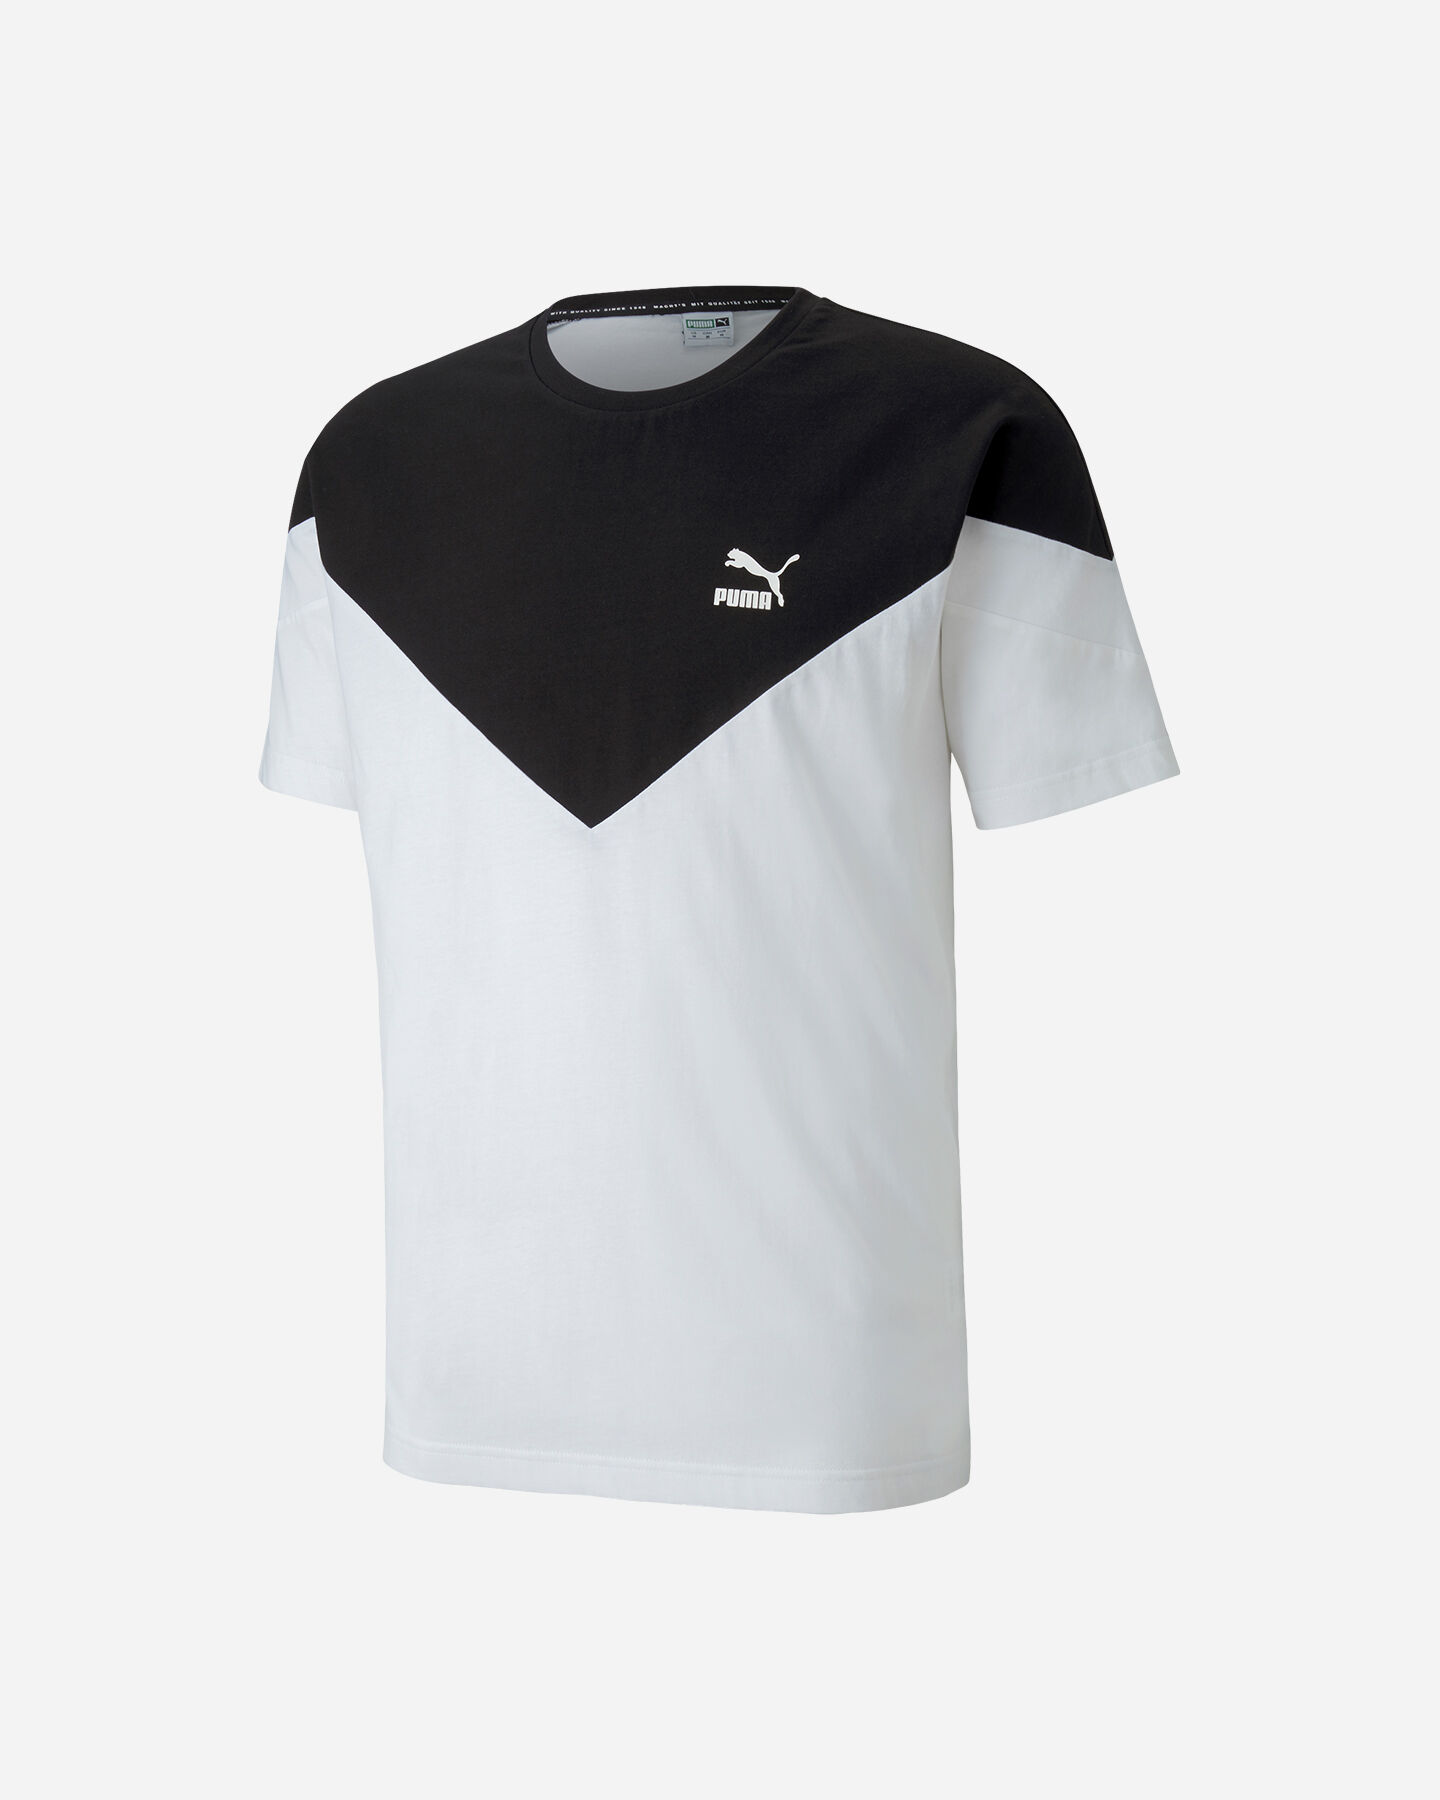  T-Shirt PUMA RALPH SAMPSON ICONIC M S5185578|02|S scatto 0